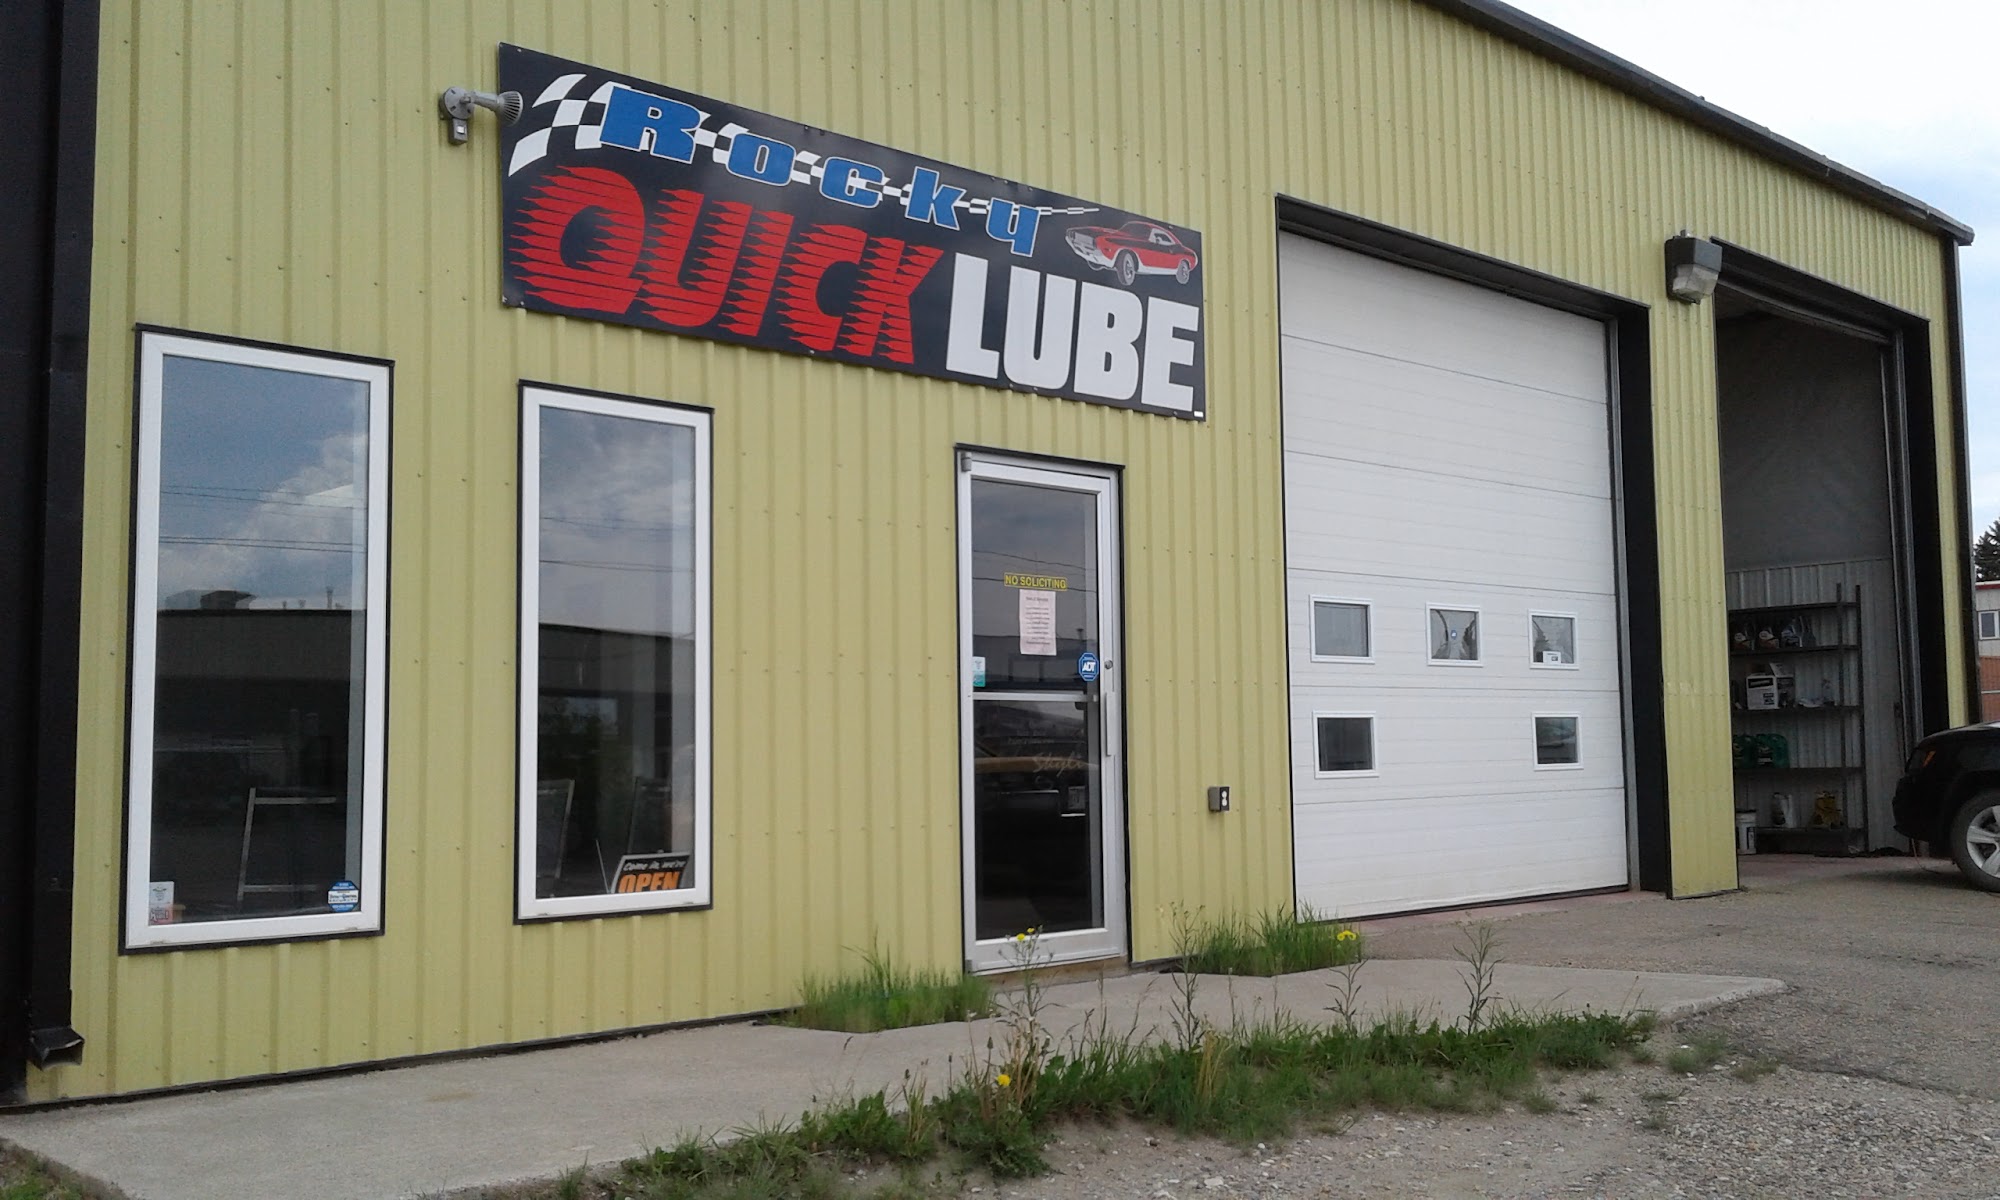 Rocky Quick Lube Ltd 4503 43 St, Rocky Mountain House Alberta T4T 1B4